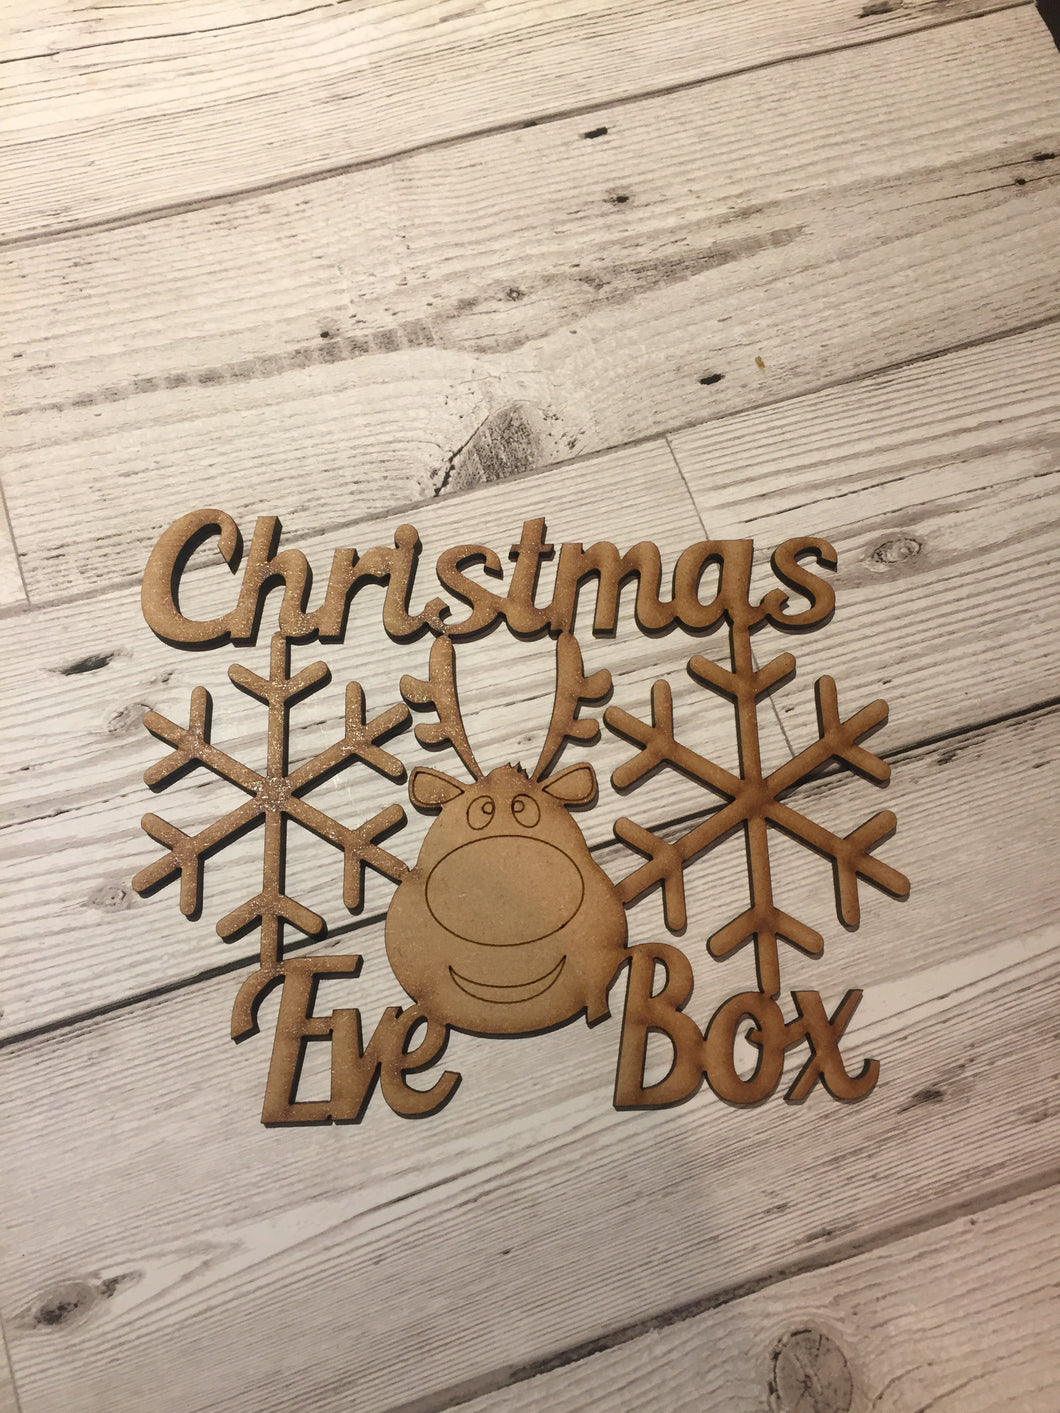 Wooden Christmas Eve box topper - Laser LLama Designs Ltd